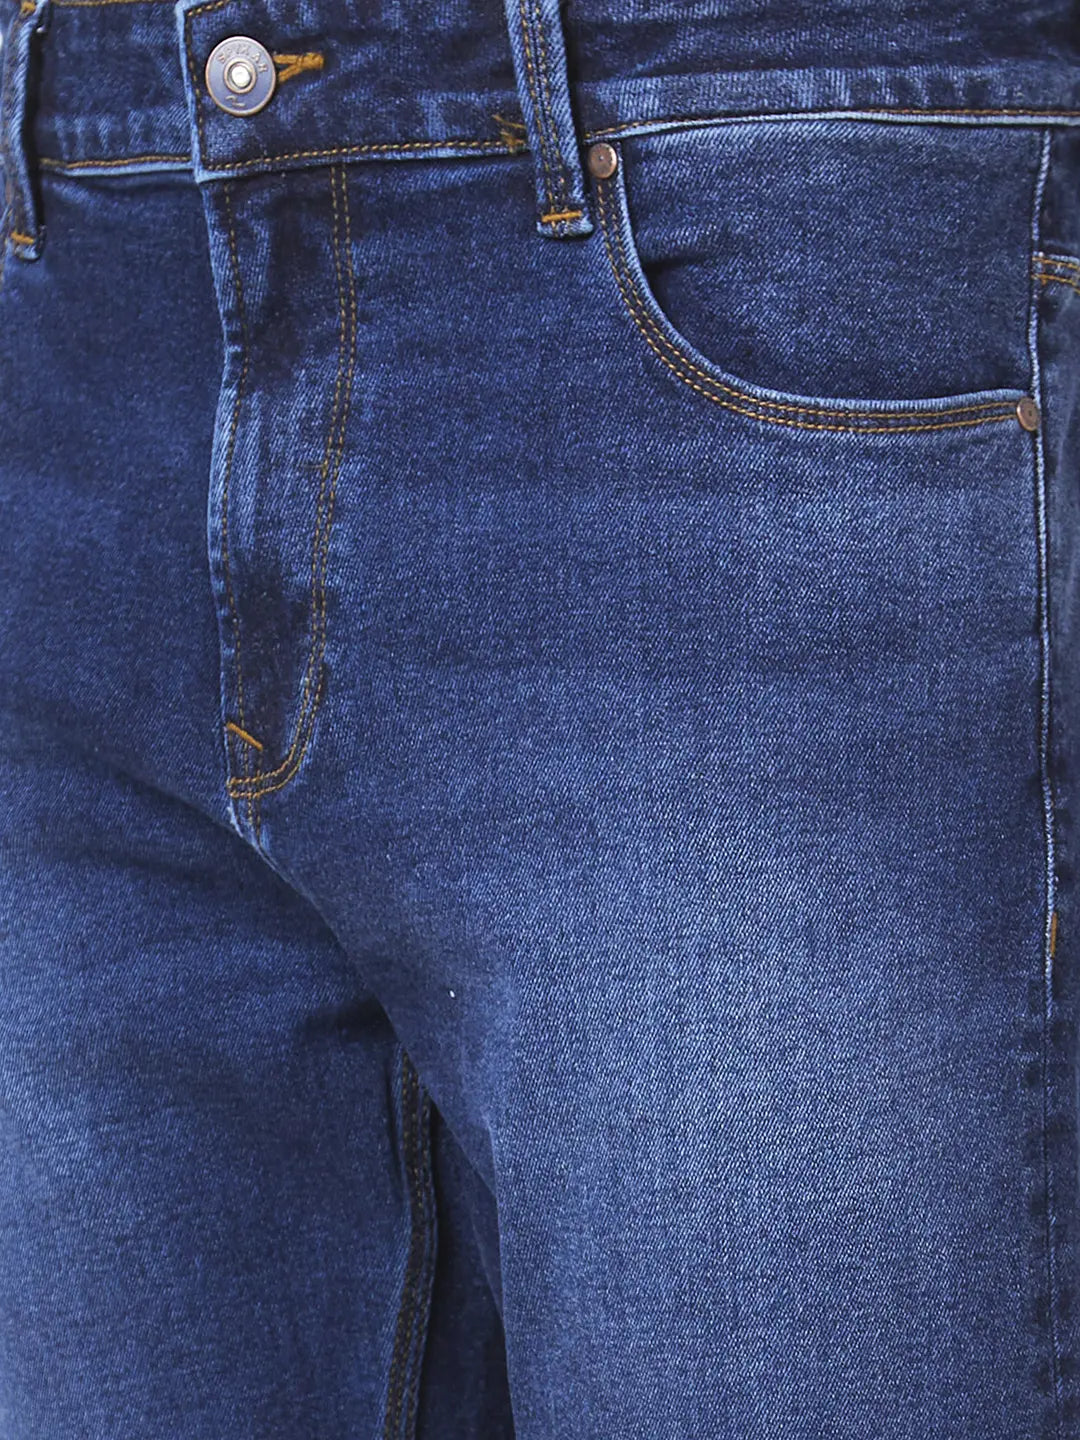 Spykar Men Dark Blue Cotton Stretch Comfort Fit Straigth Length Clean Look Mid Rise Jeans (Ricardo)